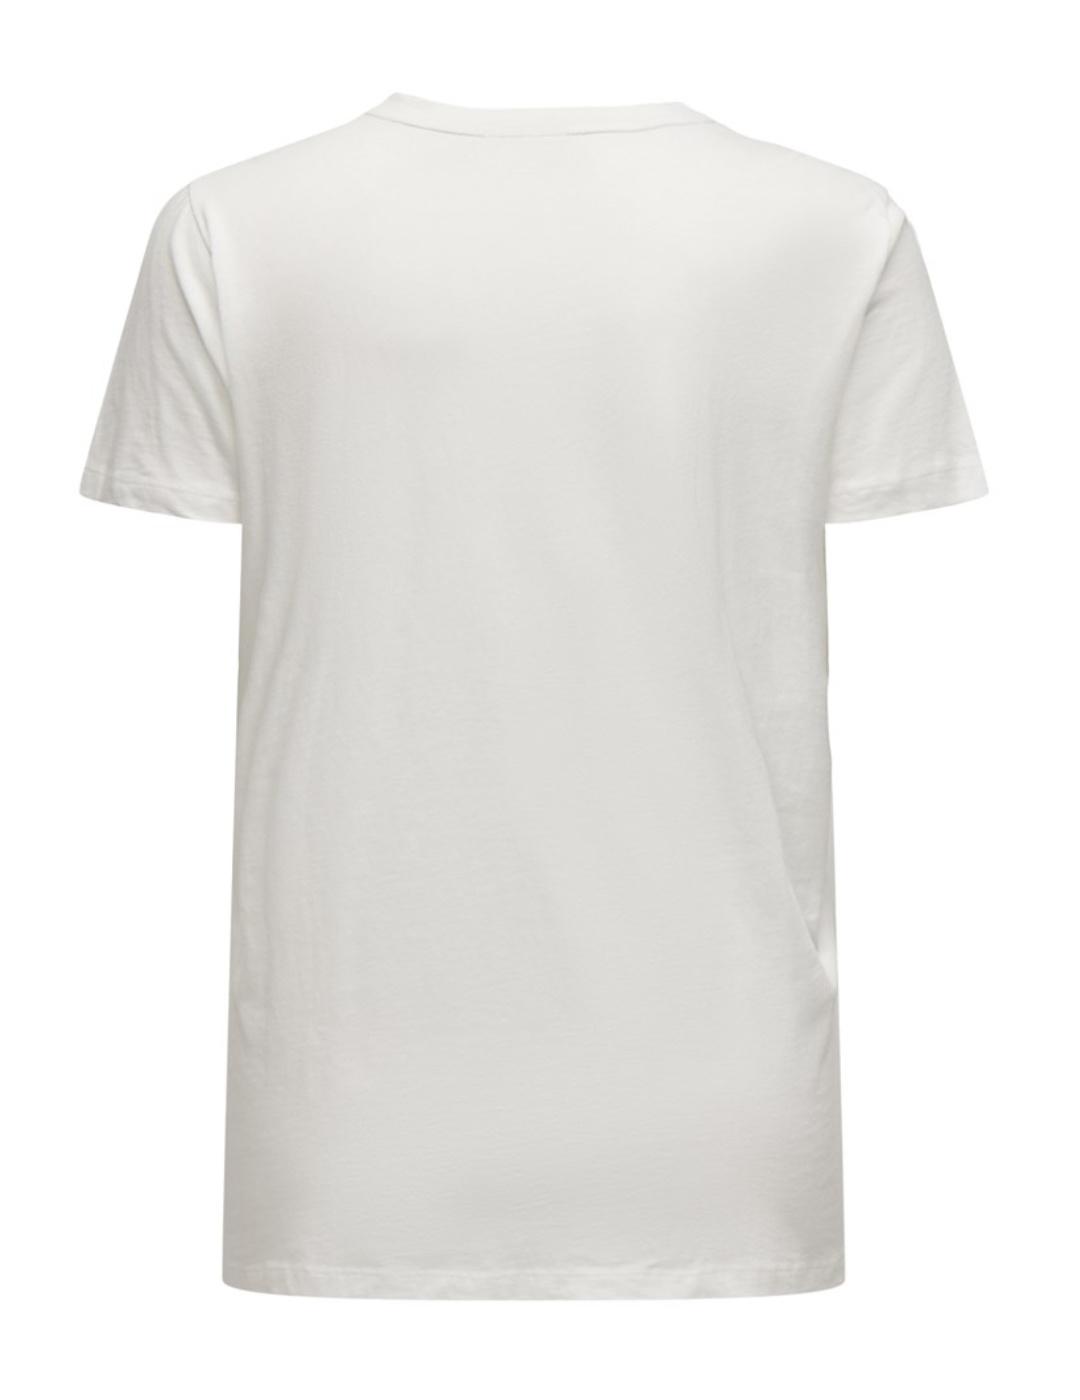 Camiseta Only Carmakoma Miko blanco manga corta para mujer